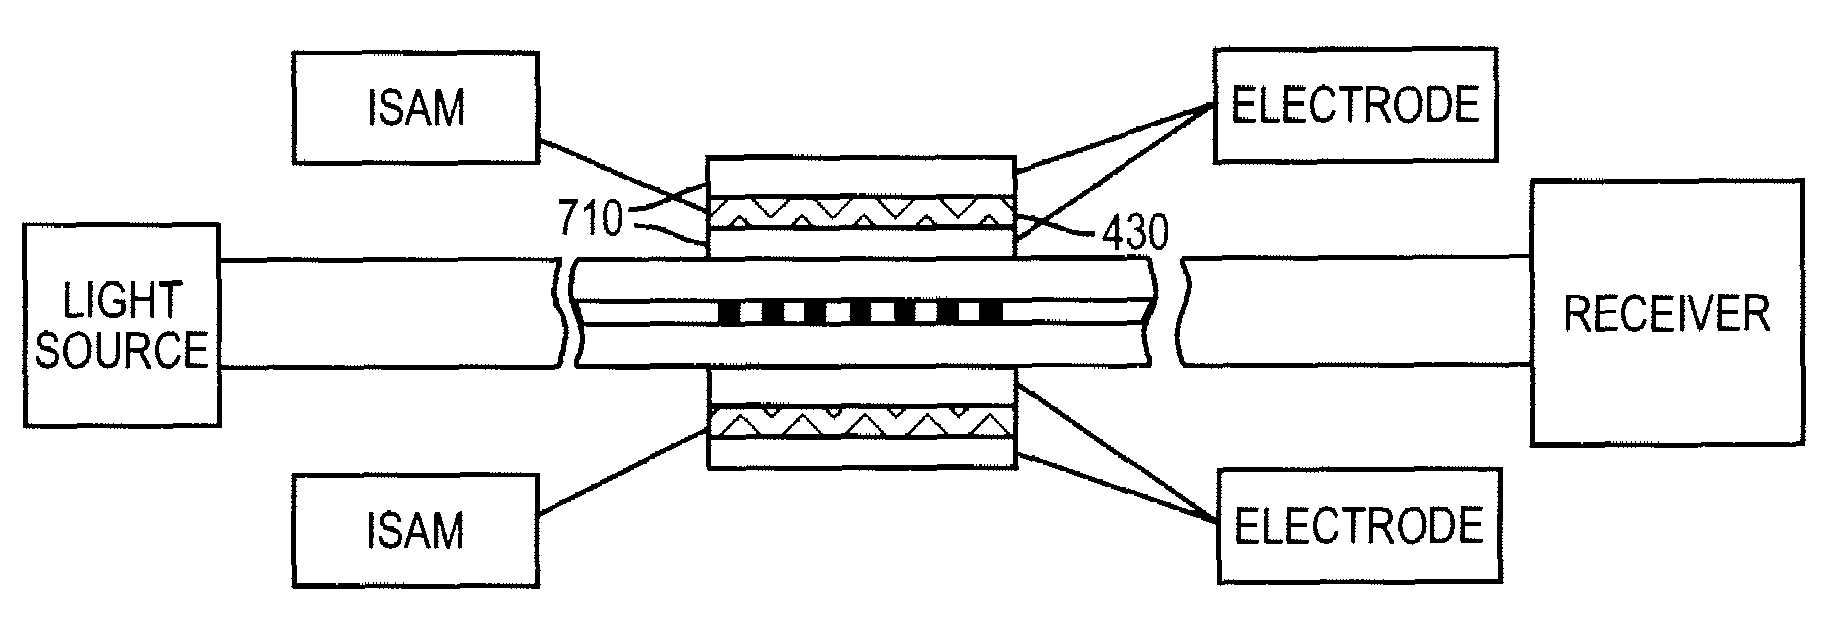 Fiber-optic sensor or modulator using tuning of long period gratings with self-assembled layers